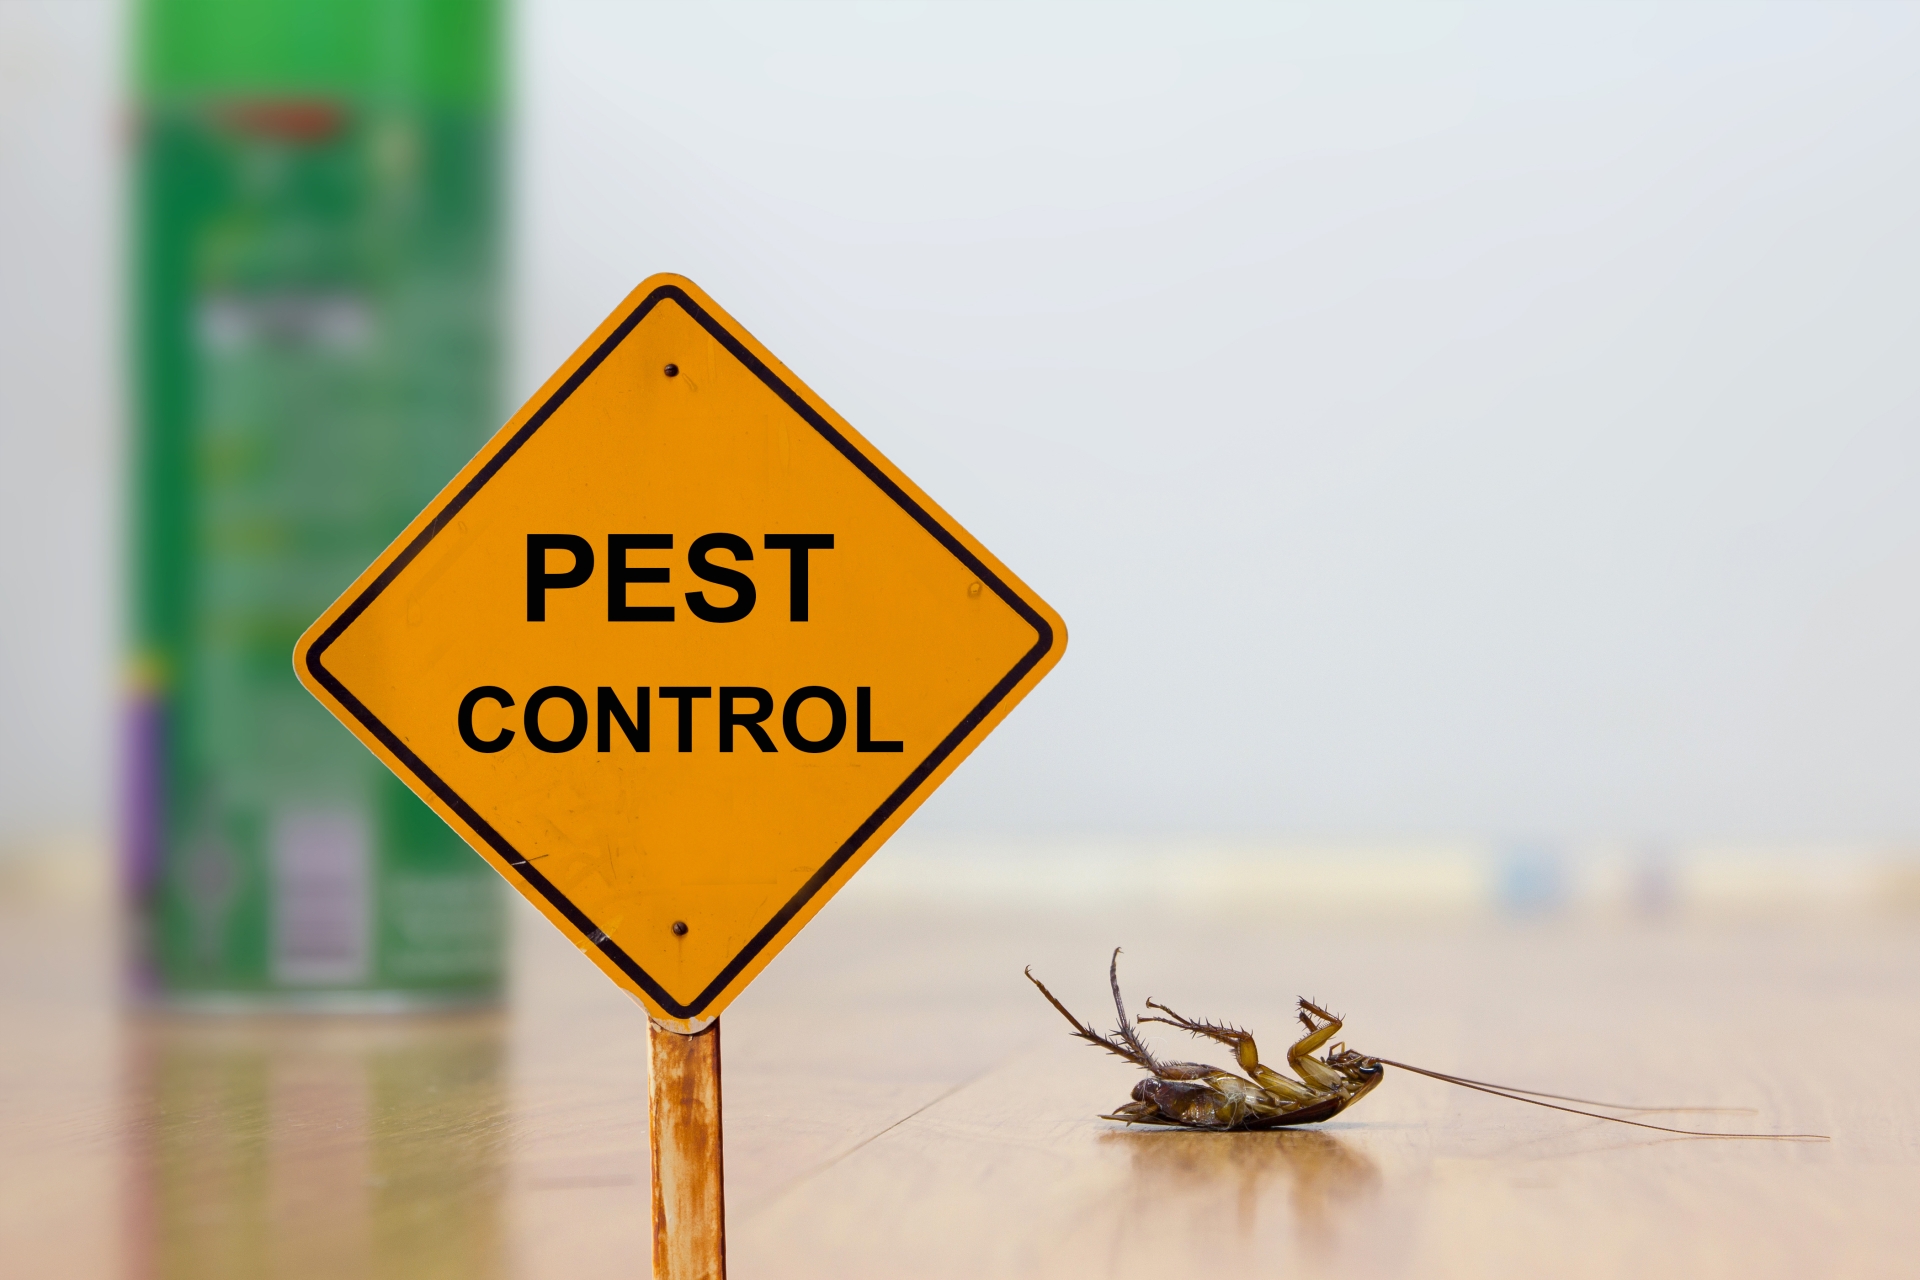 24 Hour Pest Control, Pest Control in South Kensington, SW7. Call Now 020 8166 9746